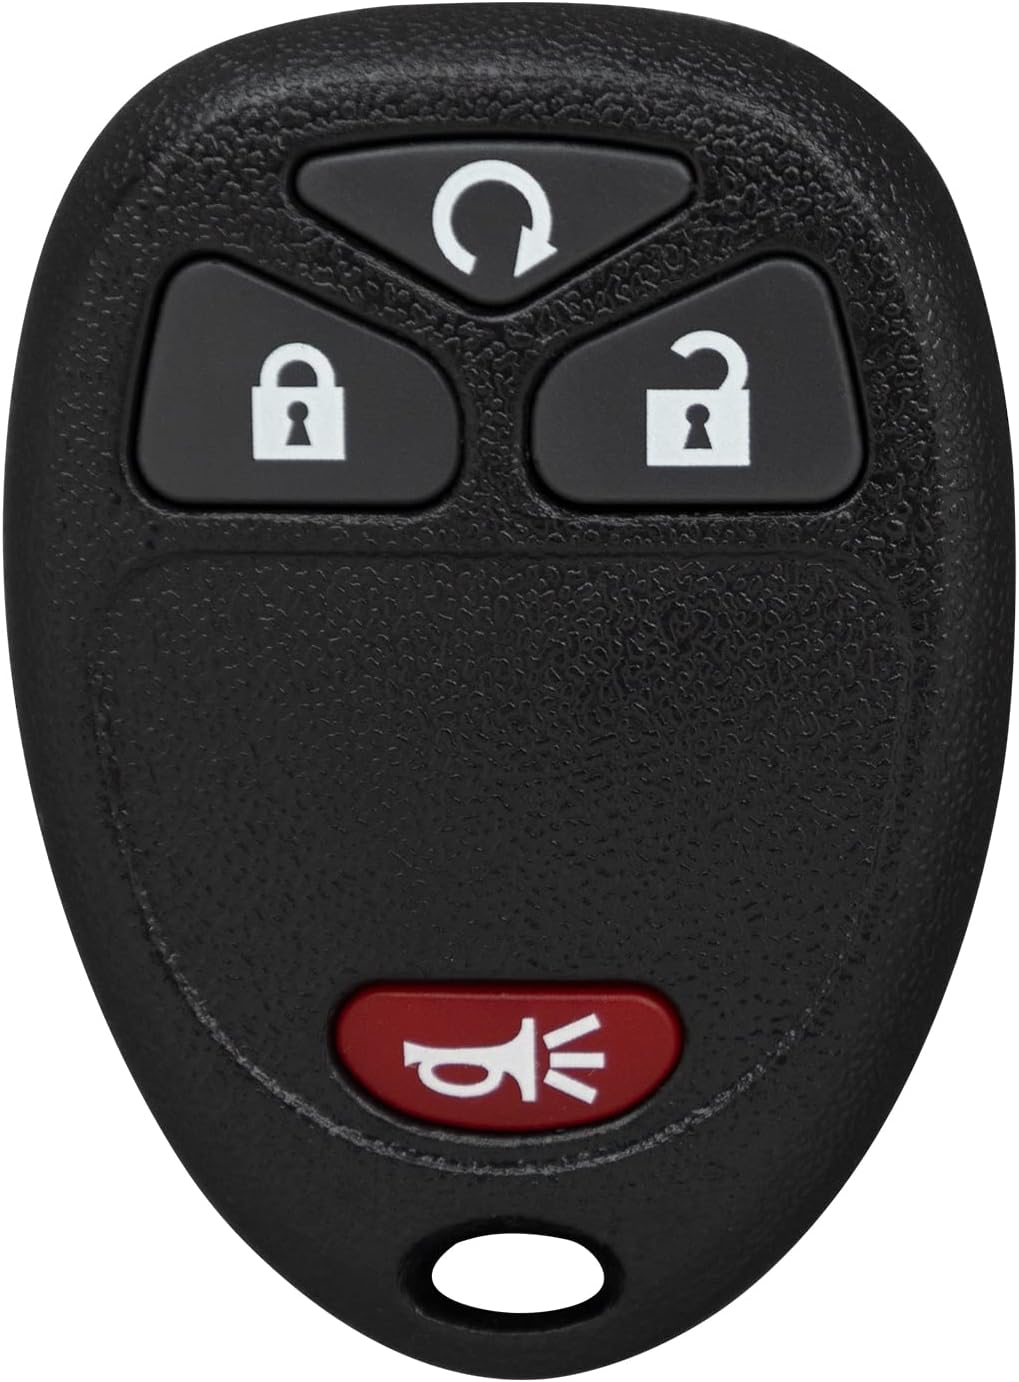 StandardAutoPart Keyless Entry Remote Key Fob Transmitter OUC60270